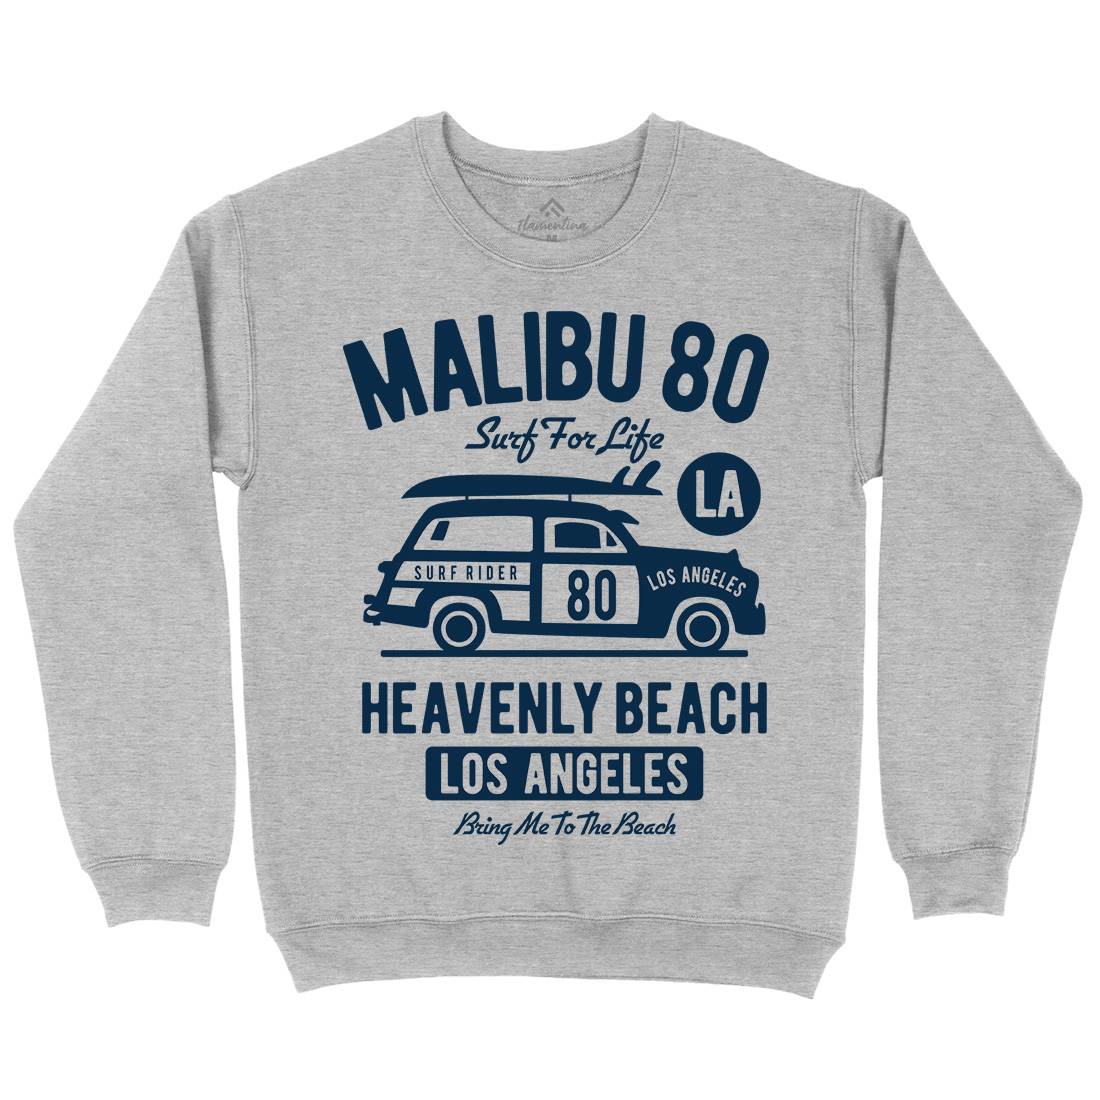 Malibu Kids Crew Neck Sweatshirt Cars B420